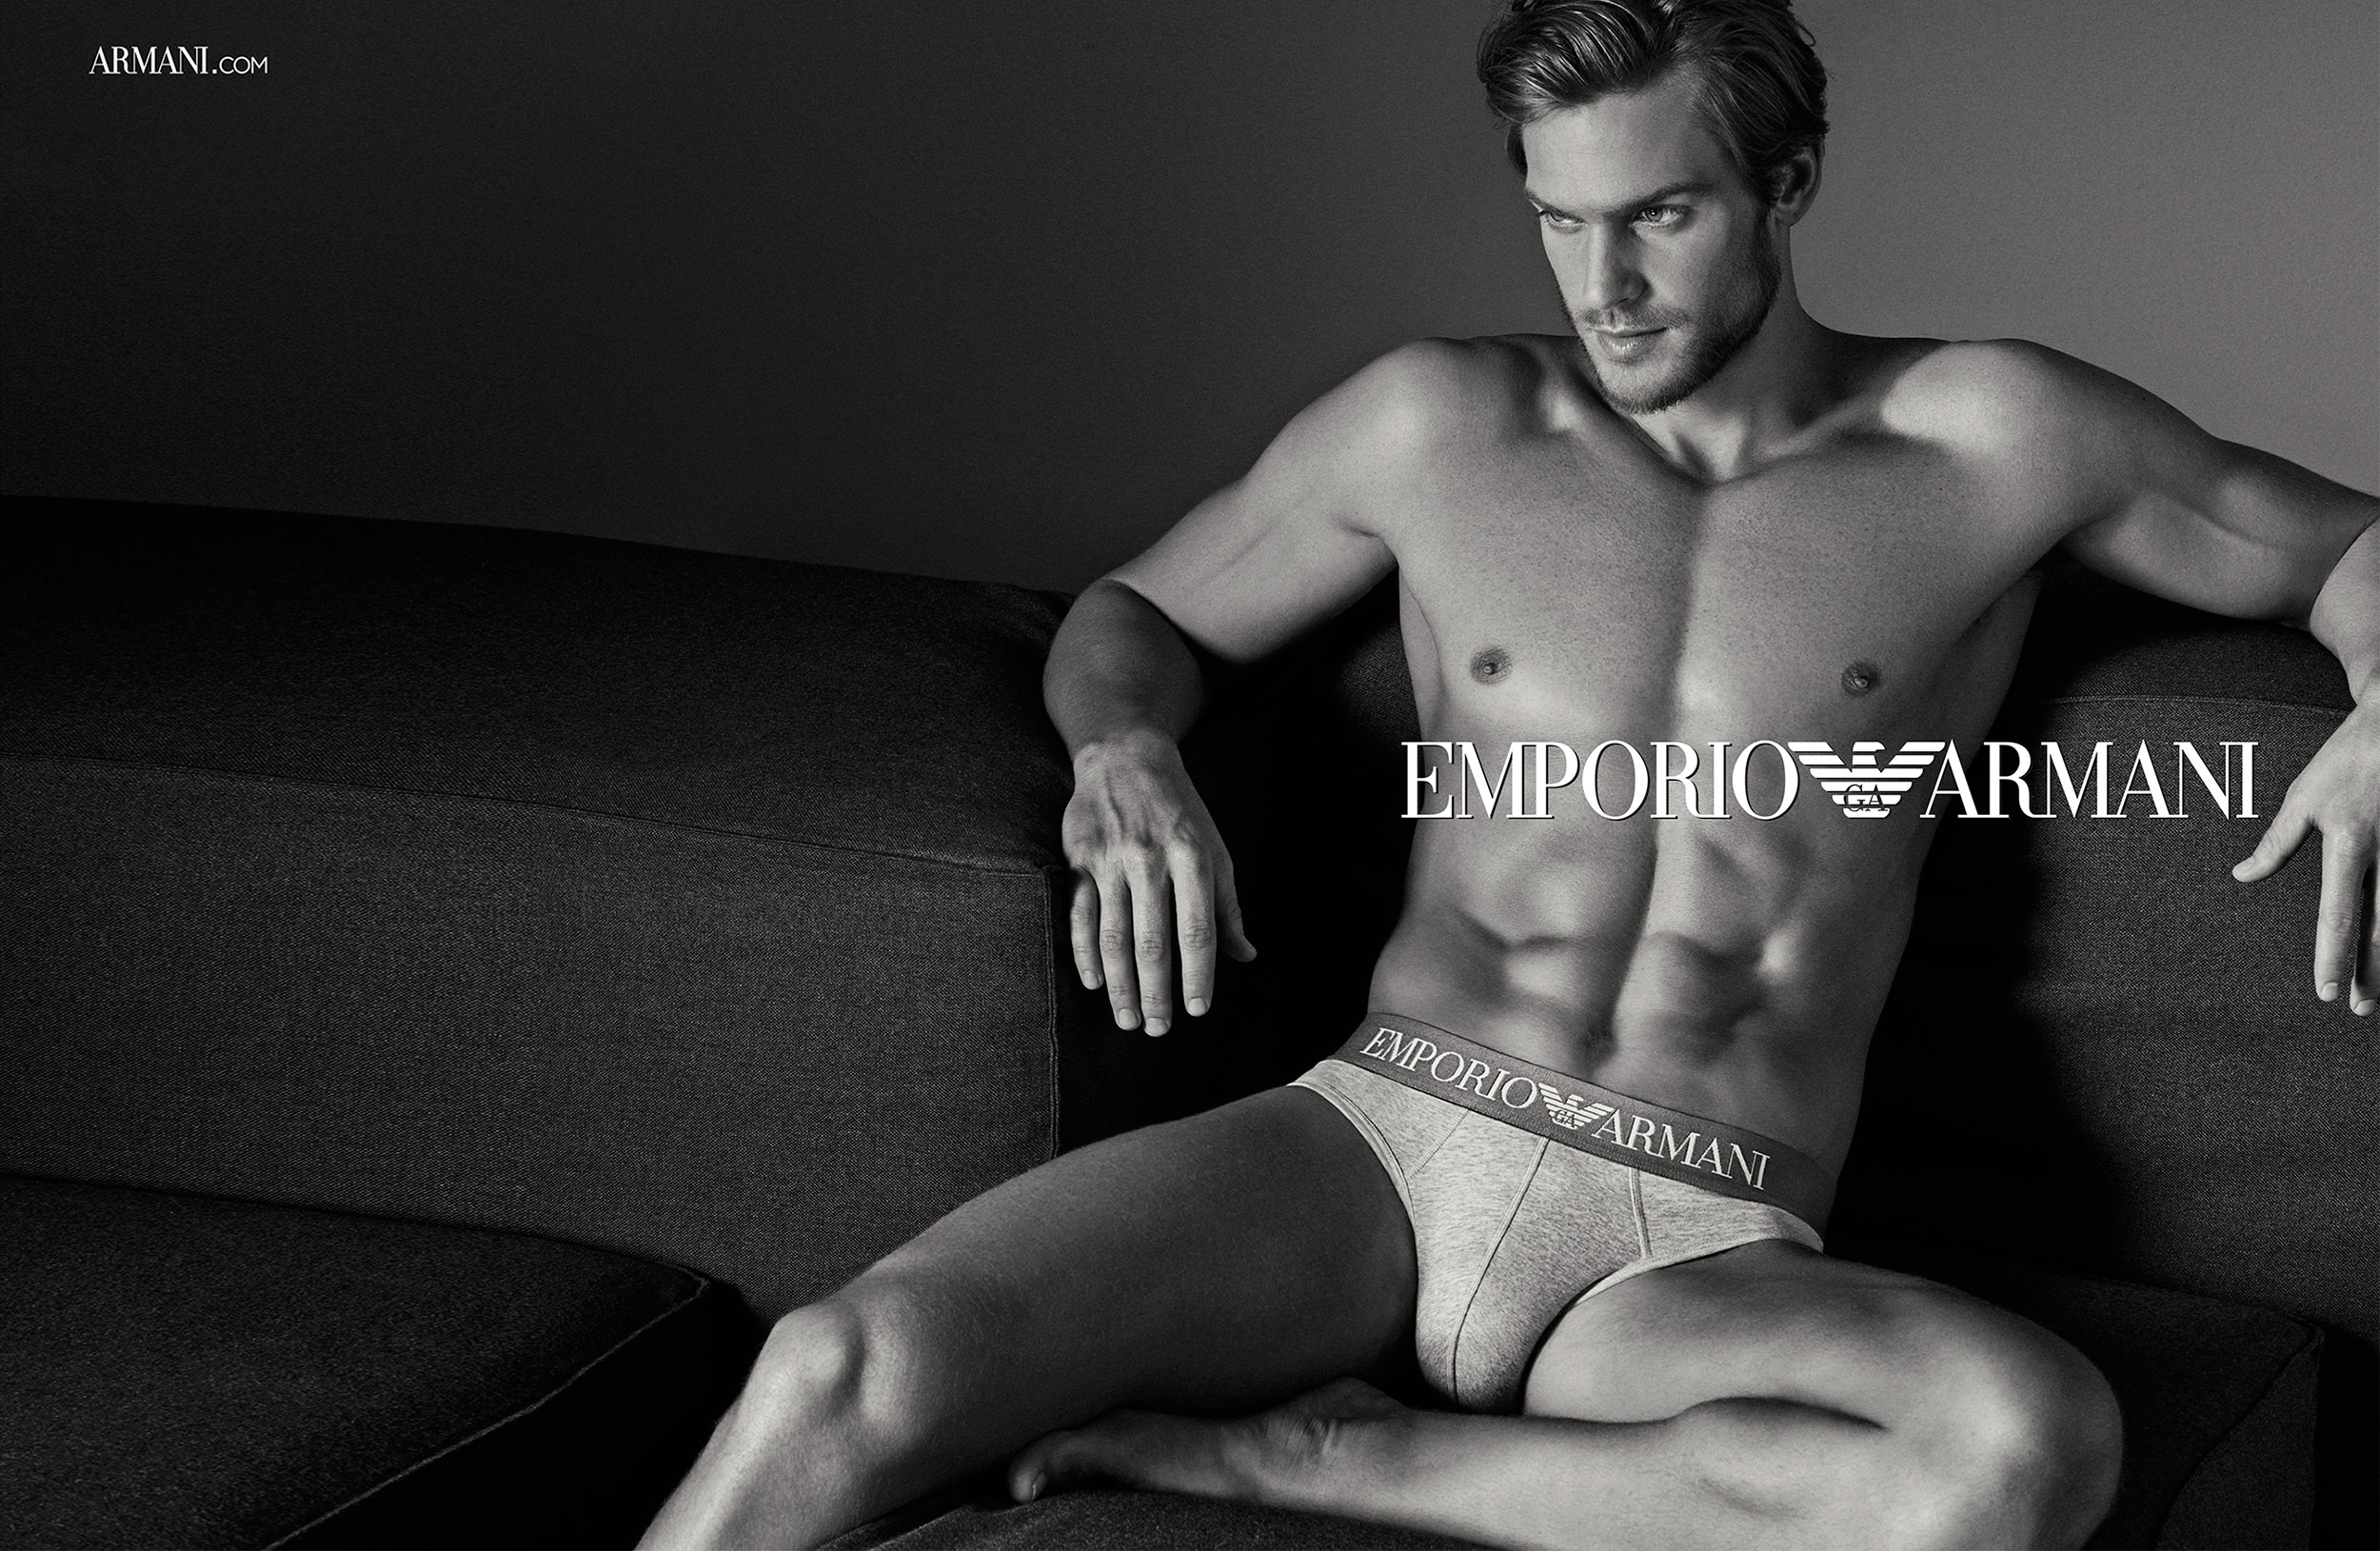 Emporio Armani - Czech male model Tomas Skoloudik, the new face